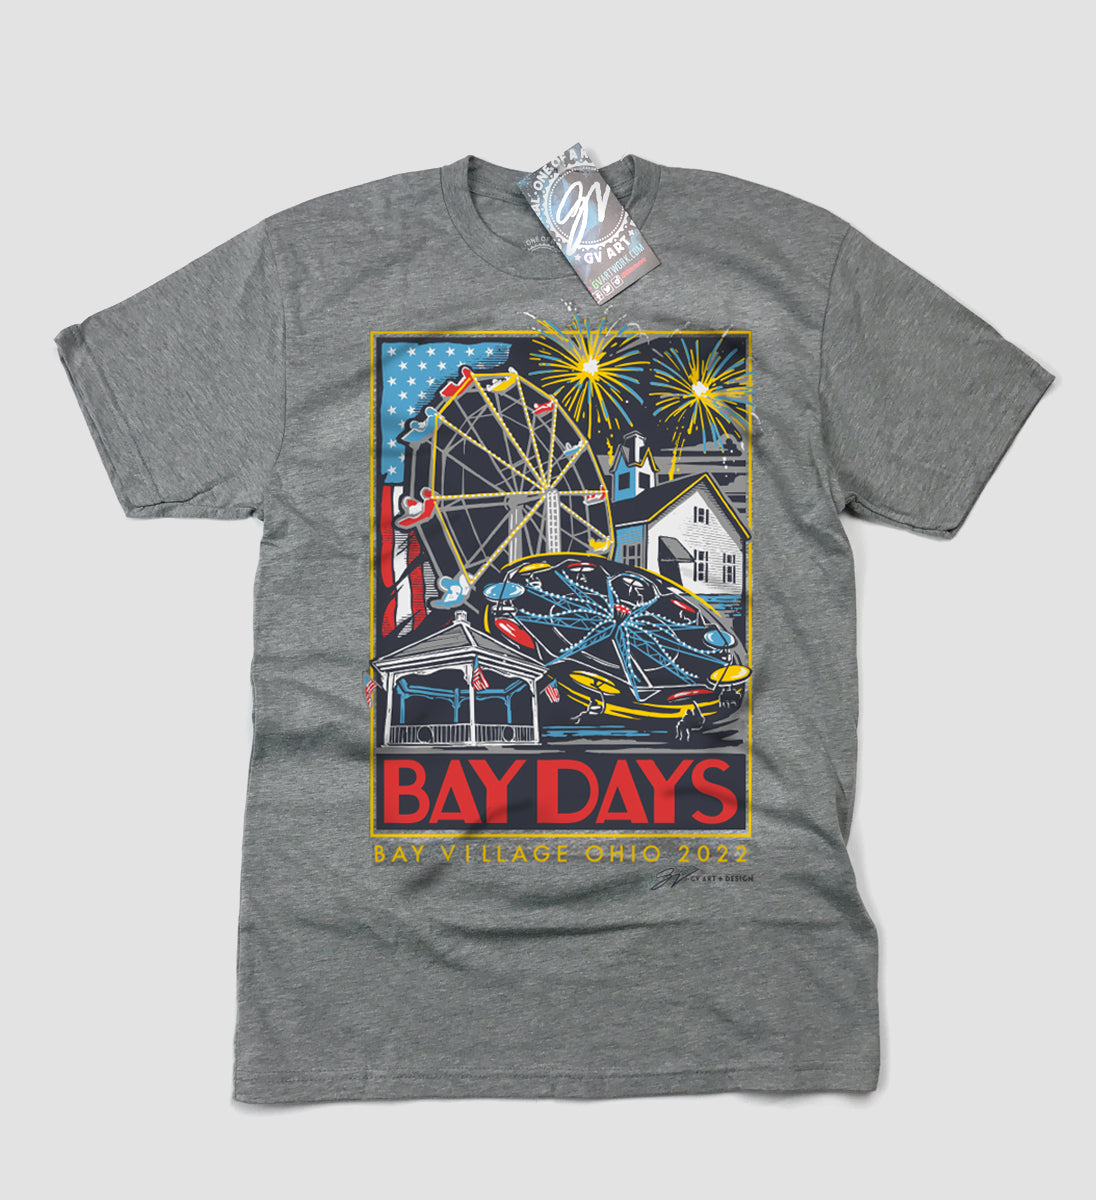 Bay Village Bay Days 2022 T shirt